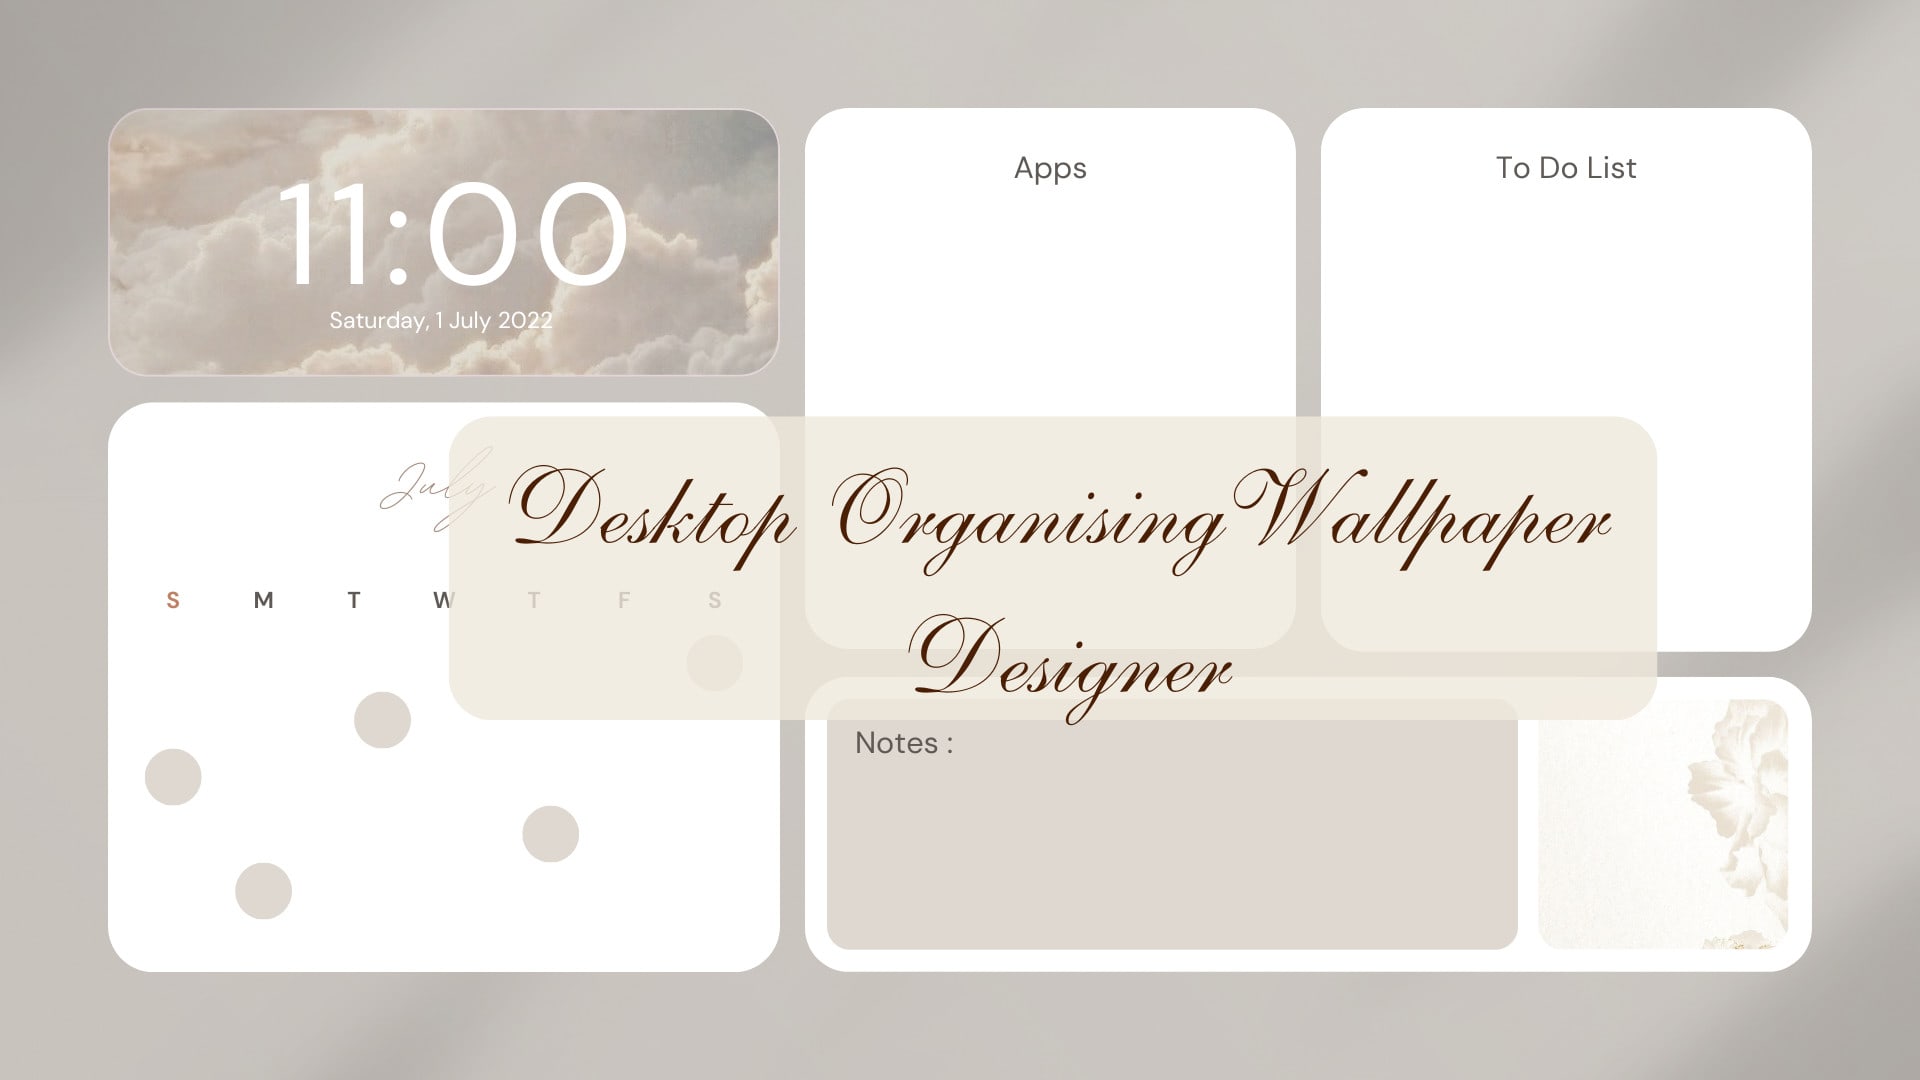 Free custom desktop organizer wallpaper templates | Canva